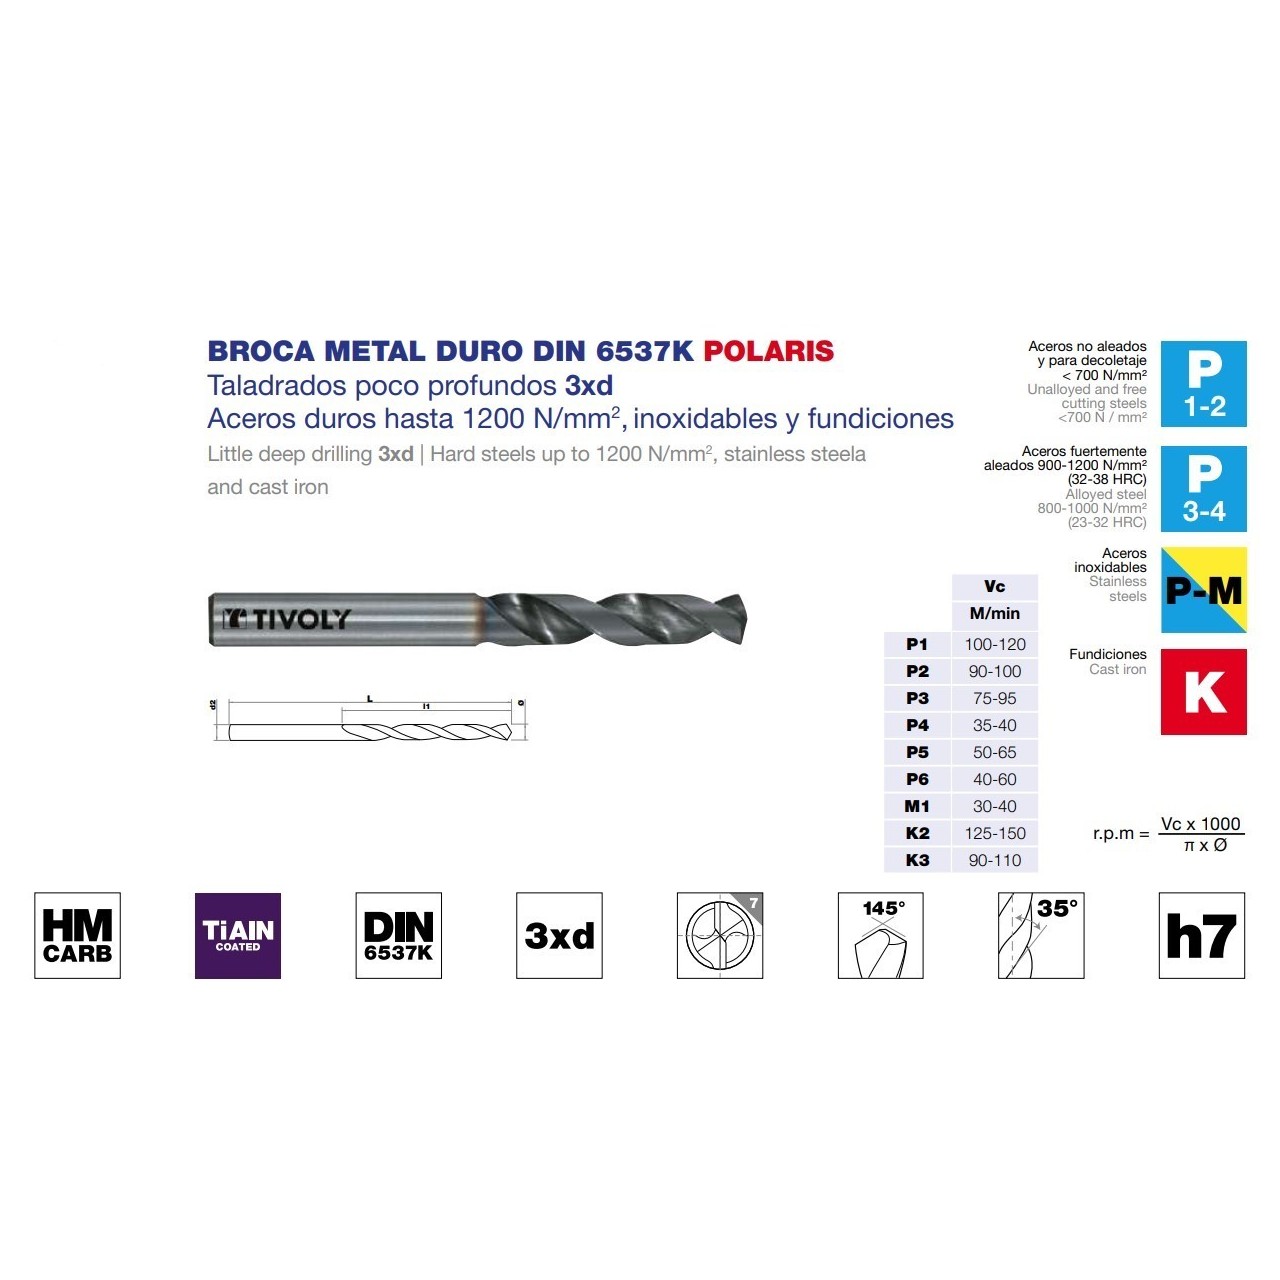 Broca DIN-6537K TiALN POLARIS 3XD metal duro